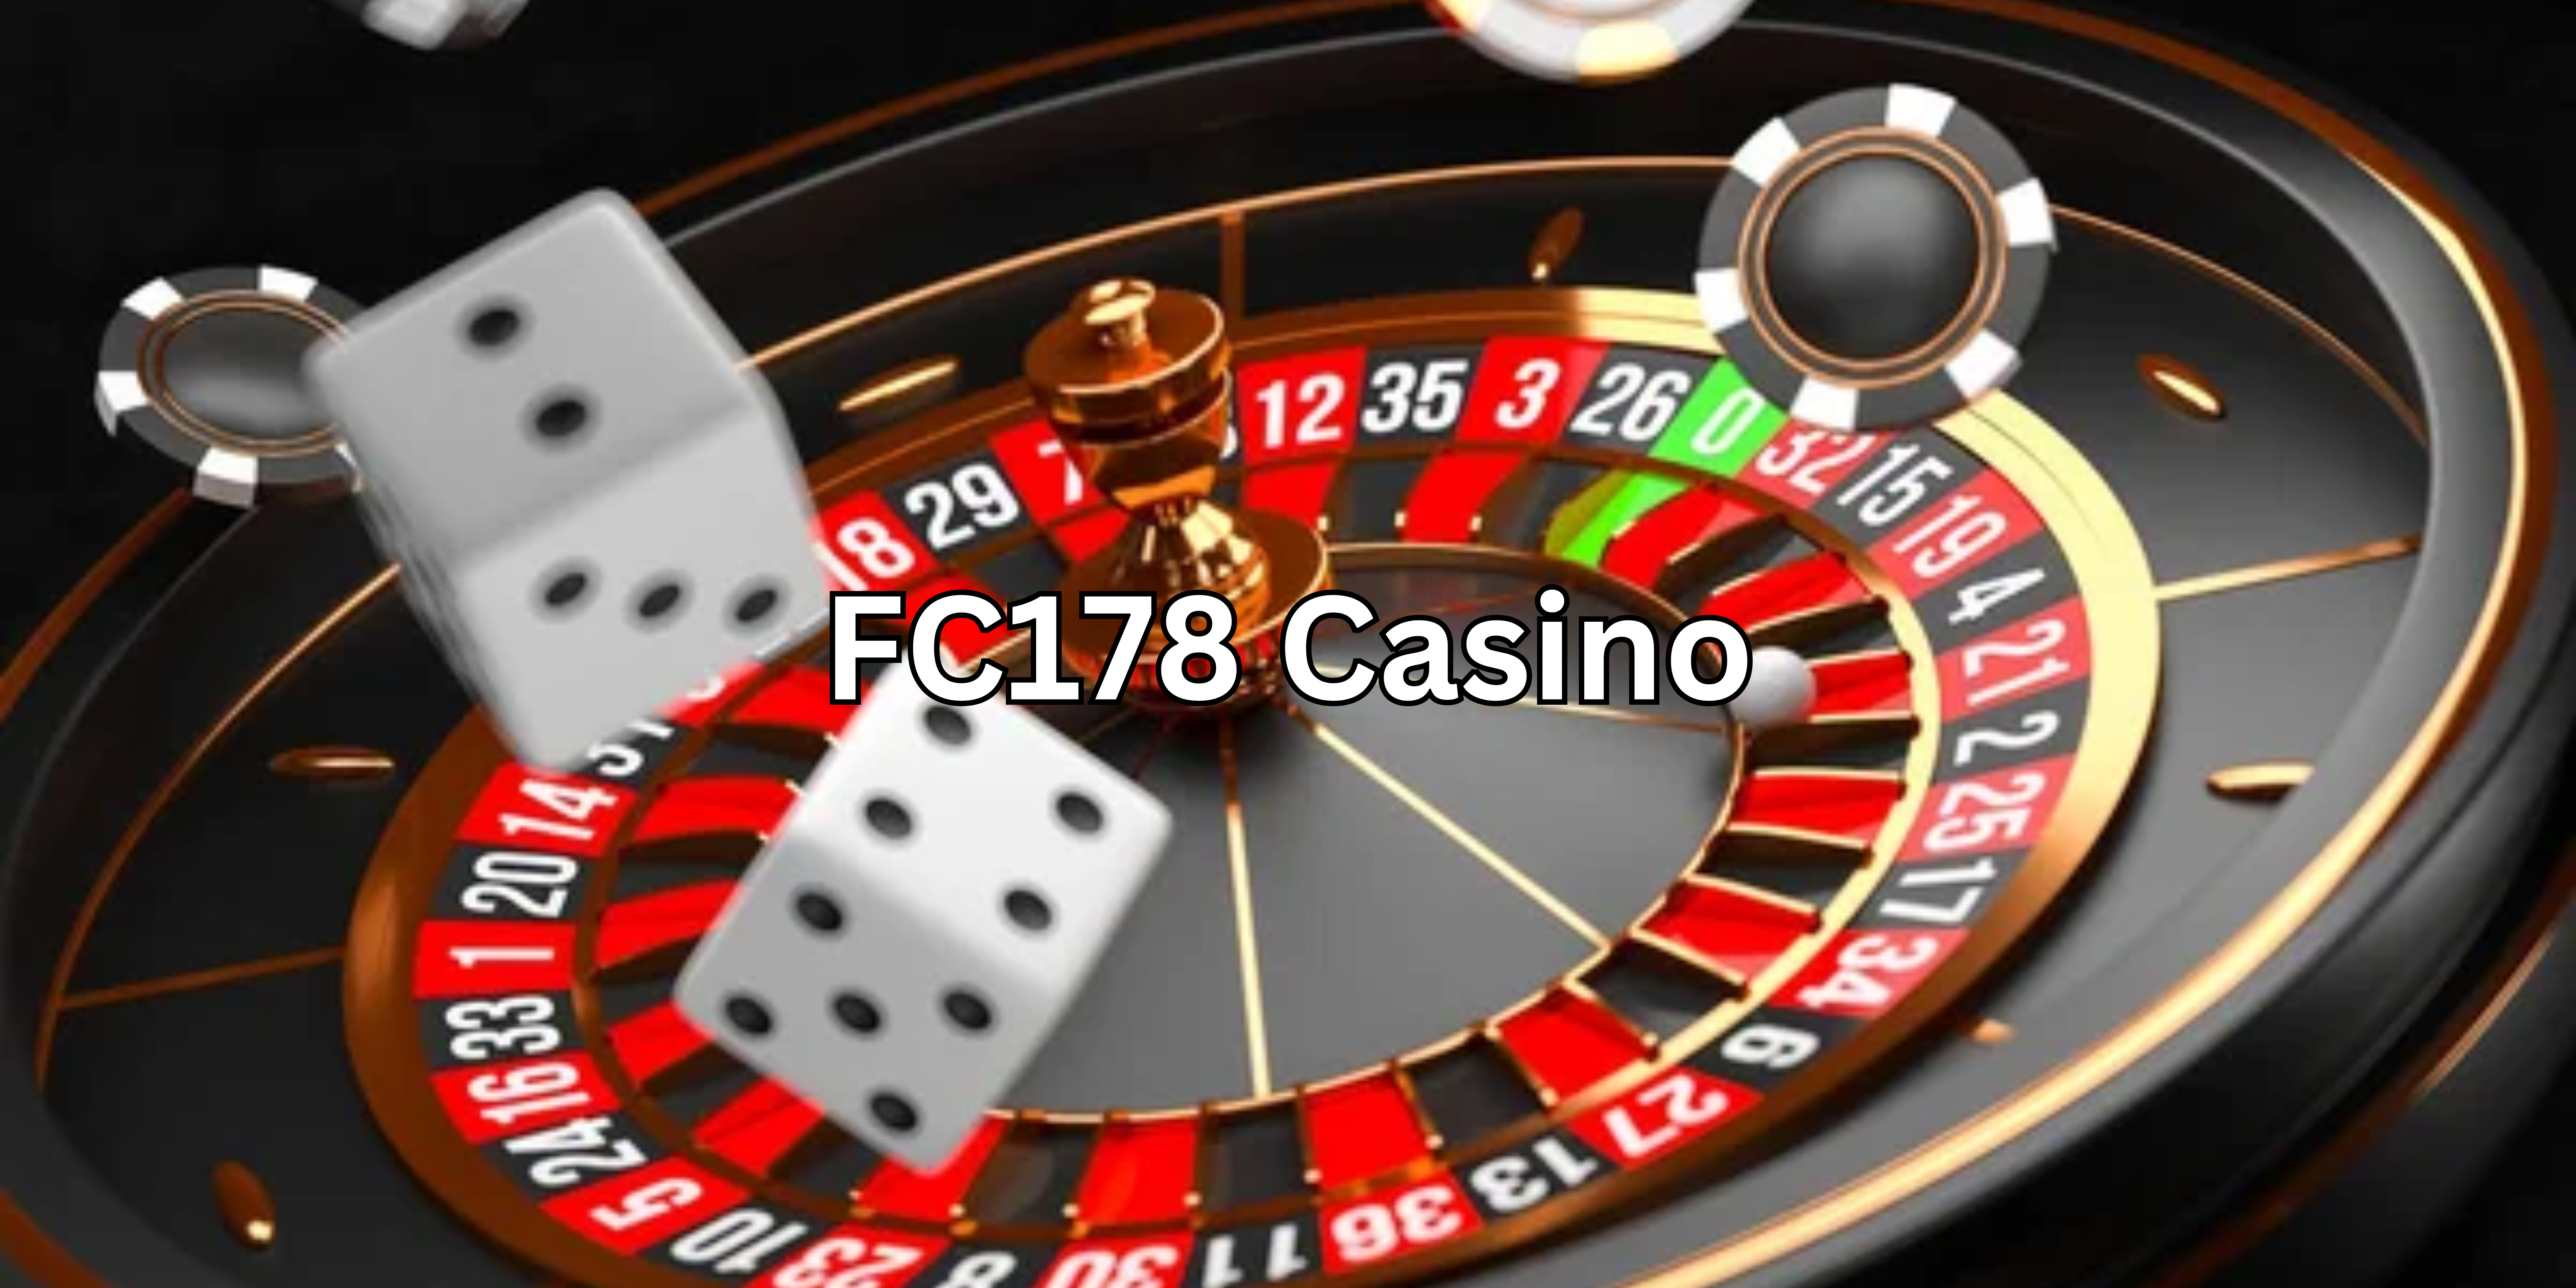 FC178 Casino